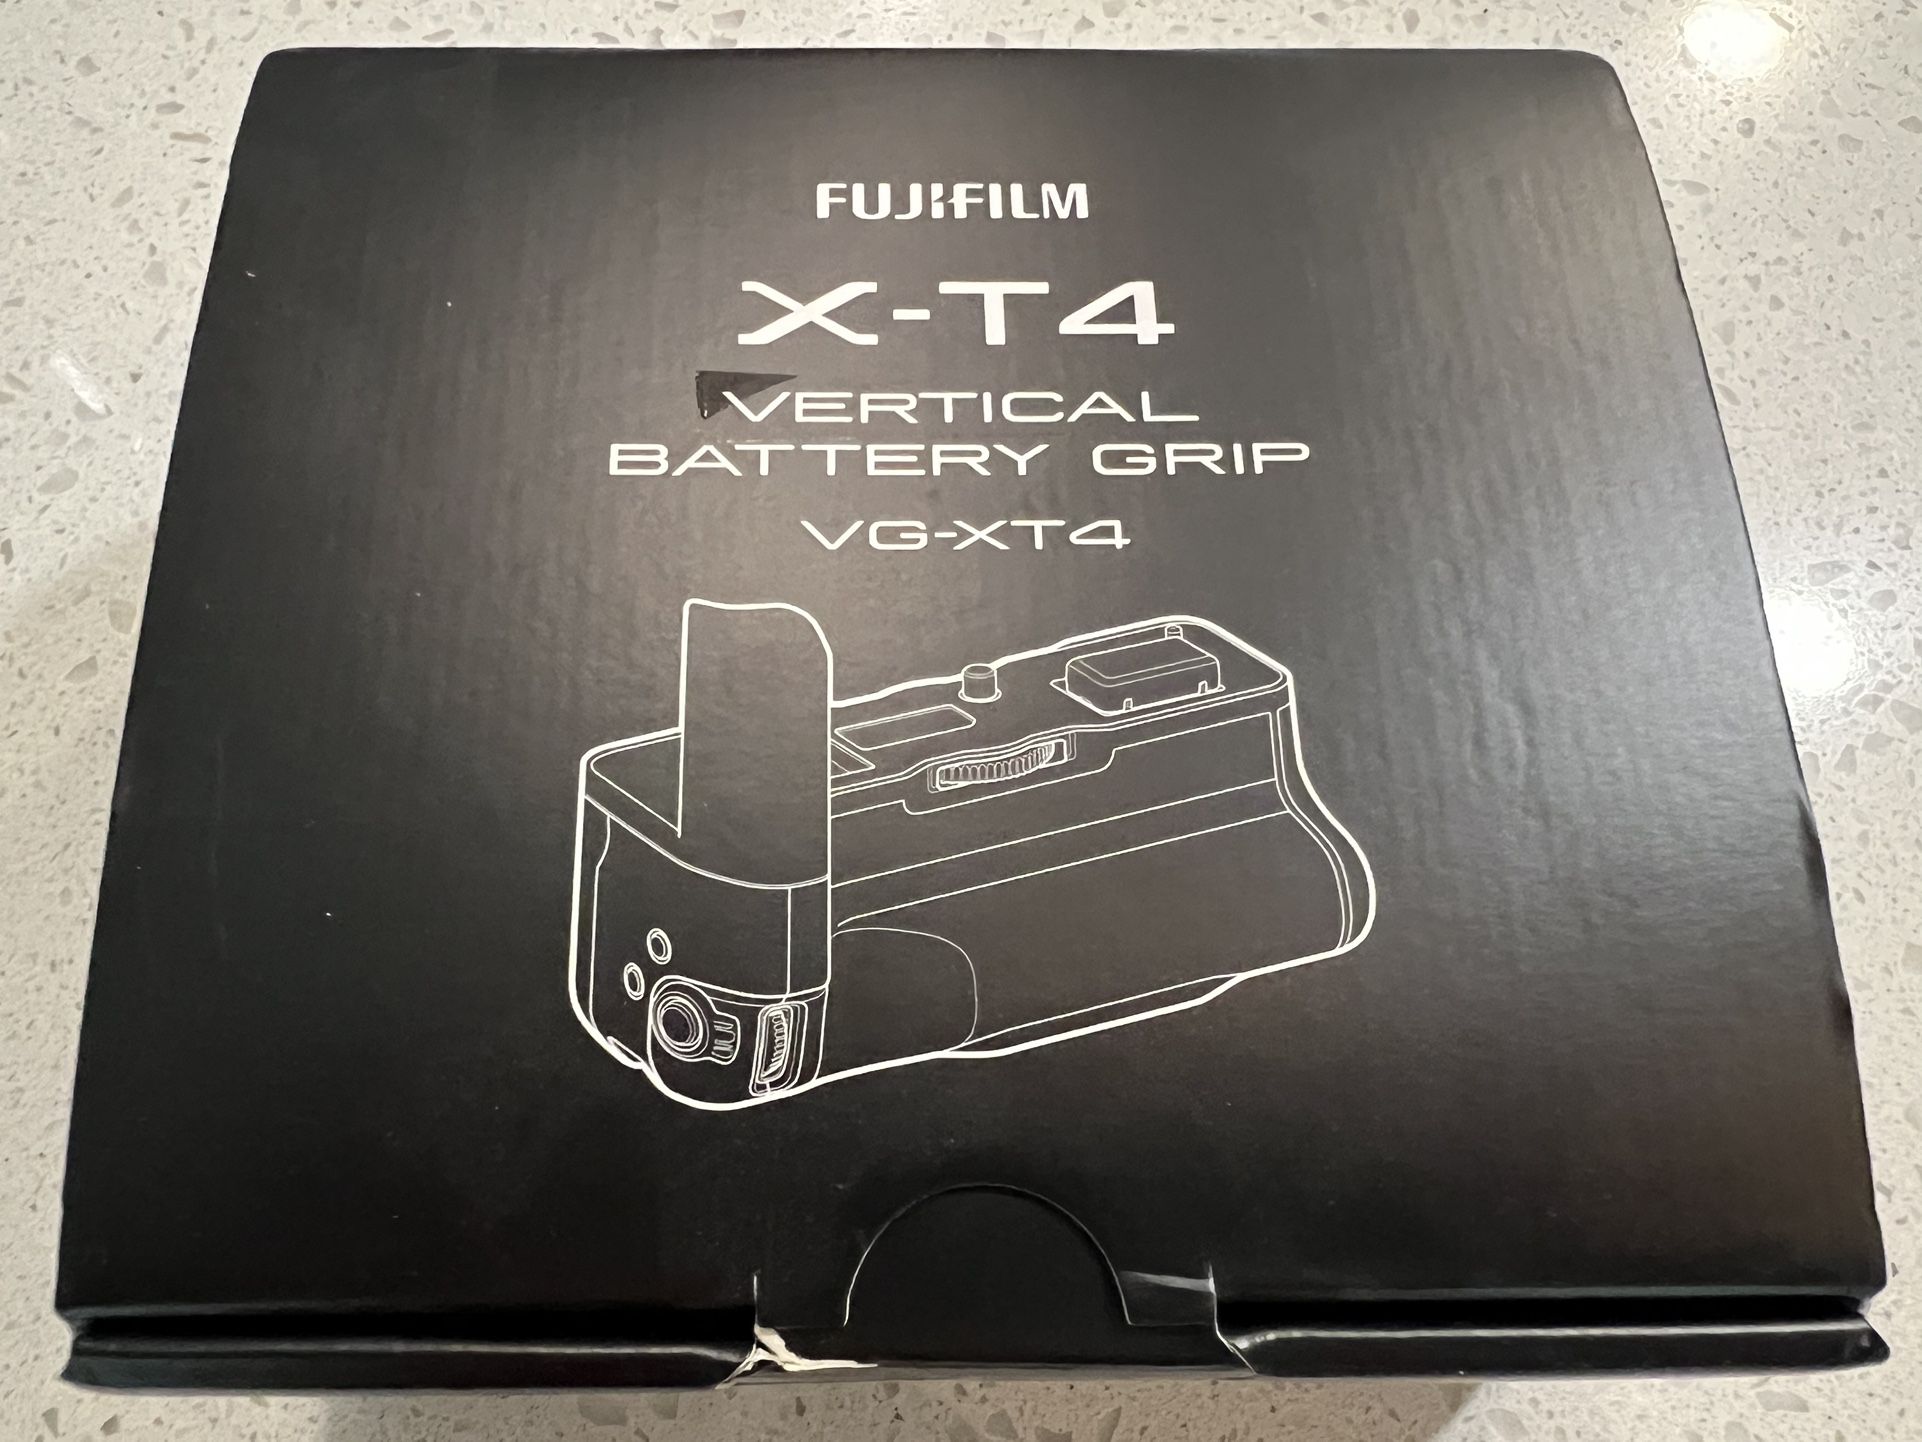 VG-XT4 Battery grip for Fujifilm X-T4 XT4 camera